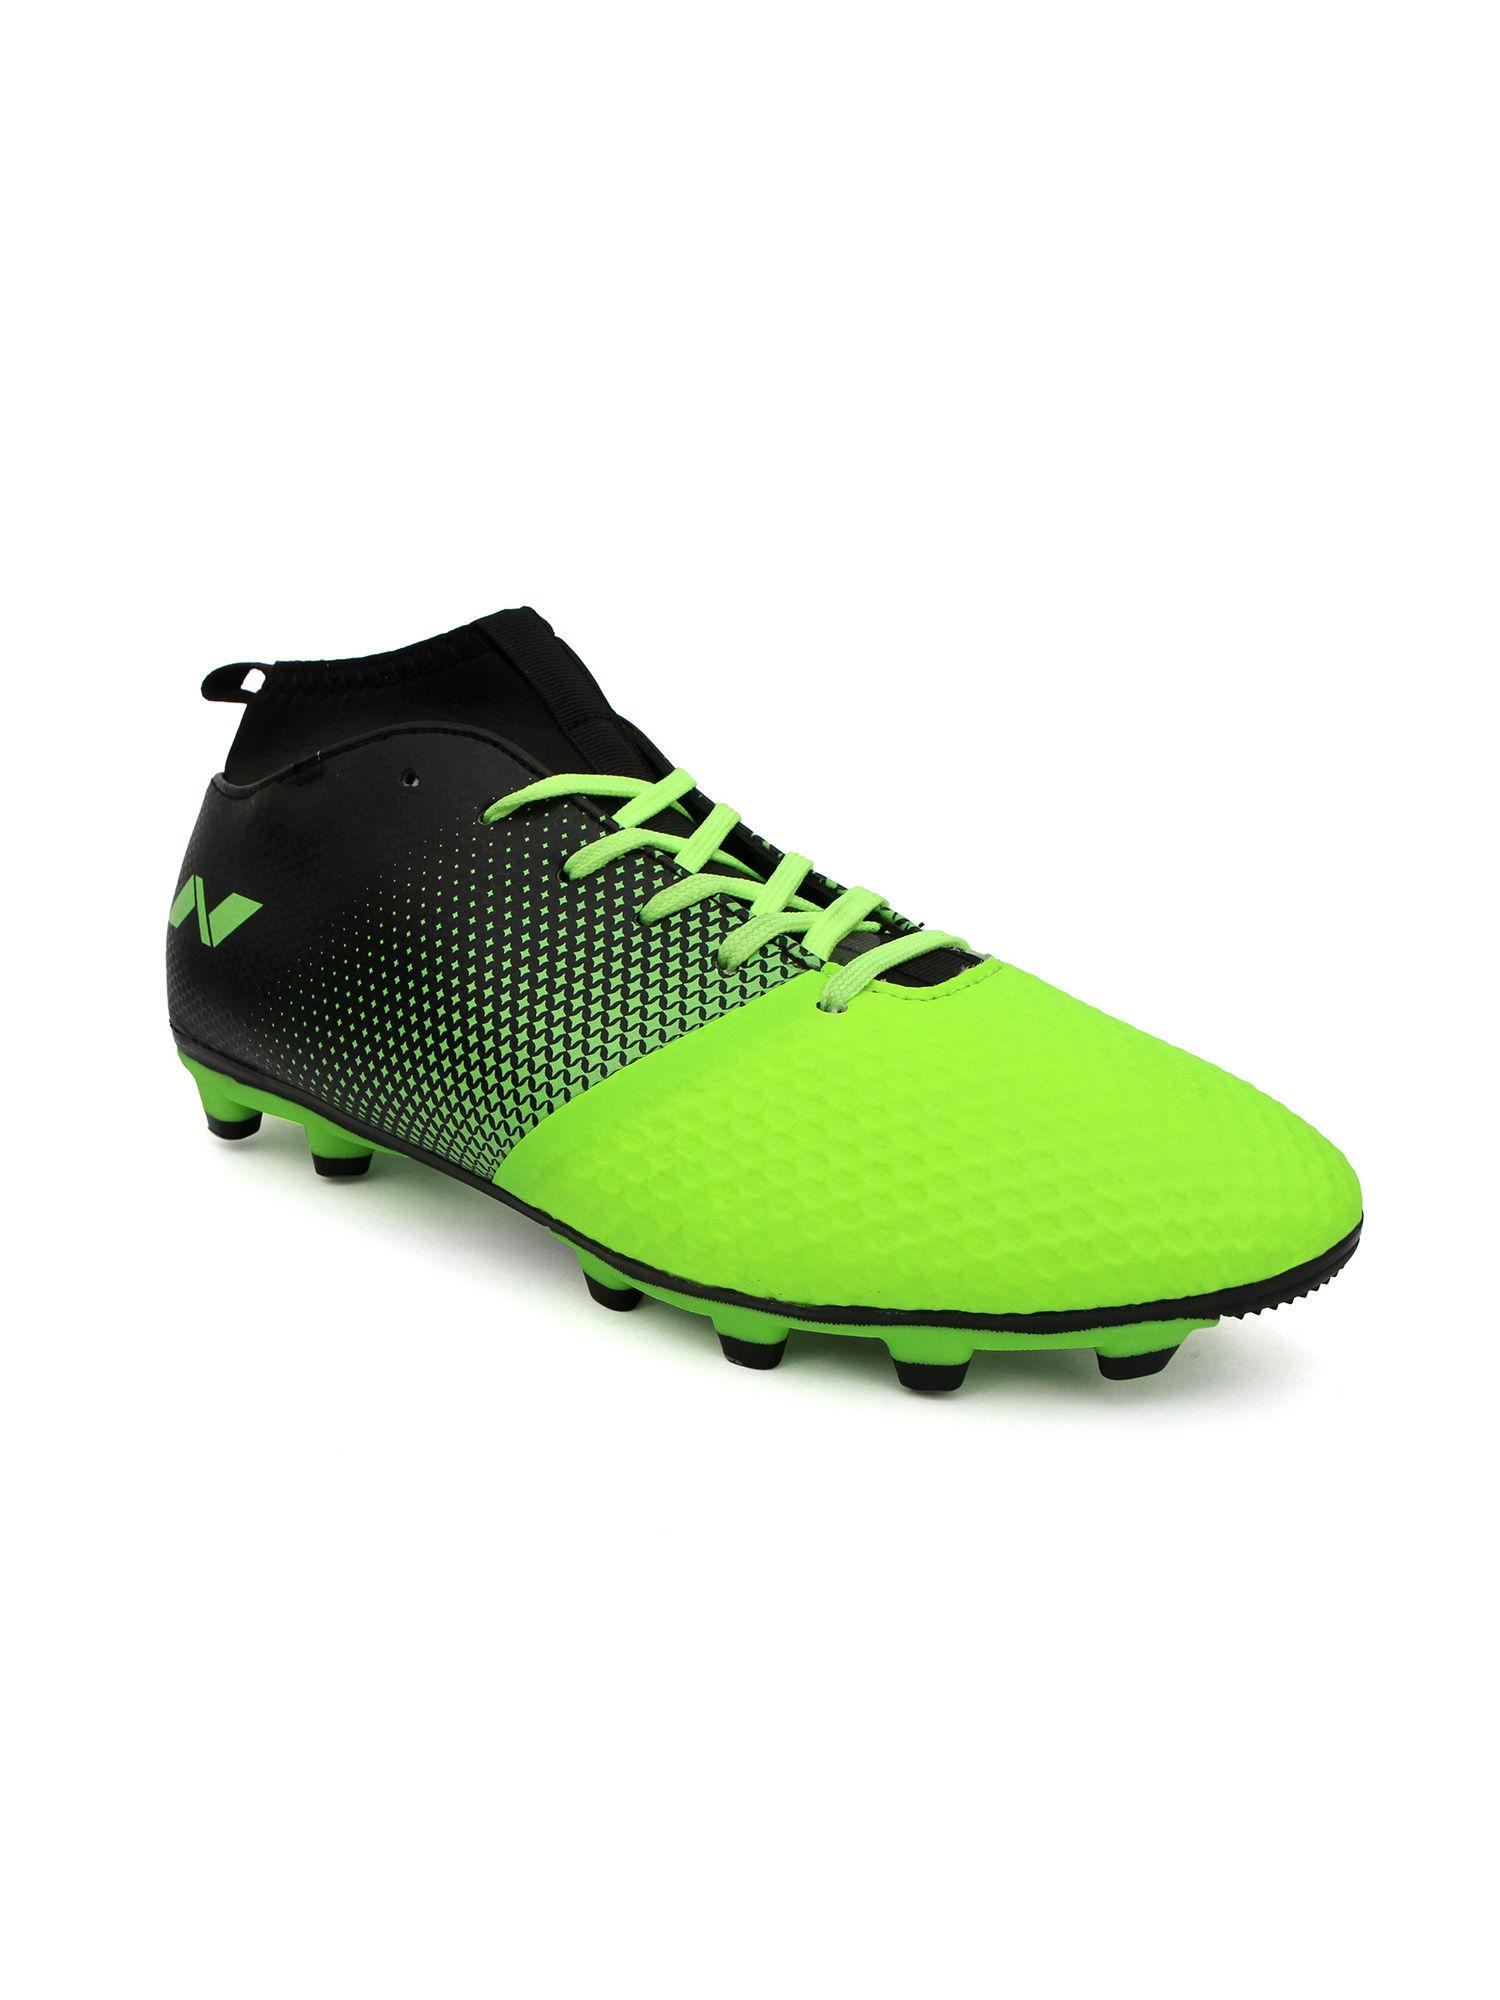 green ashtang sports shoes for men